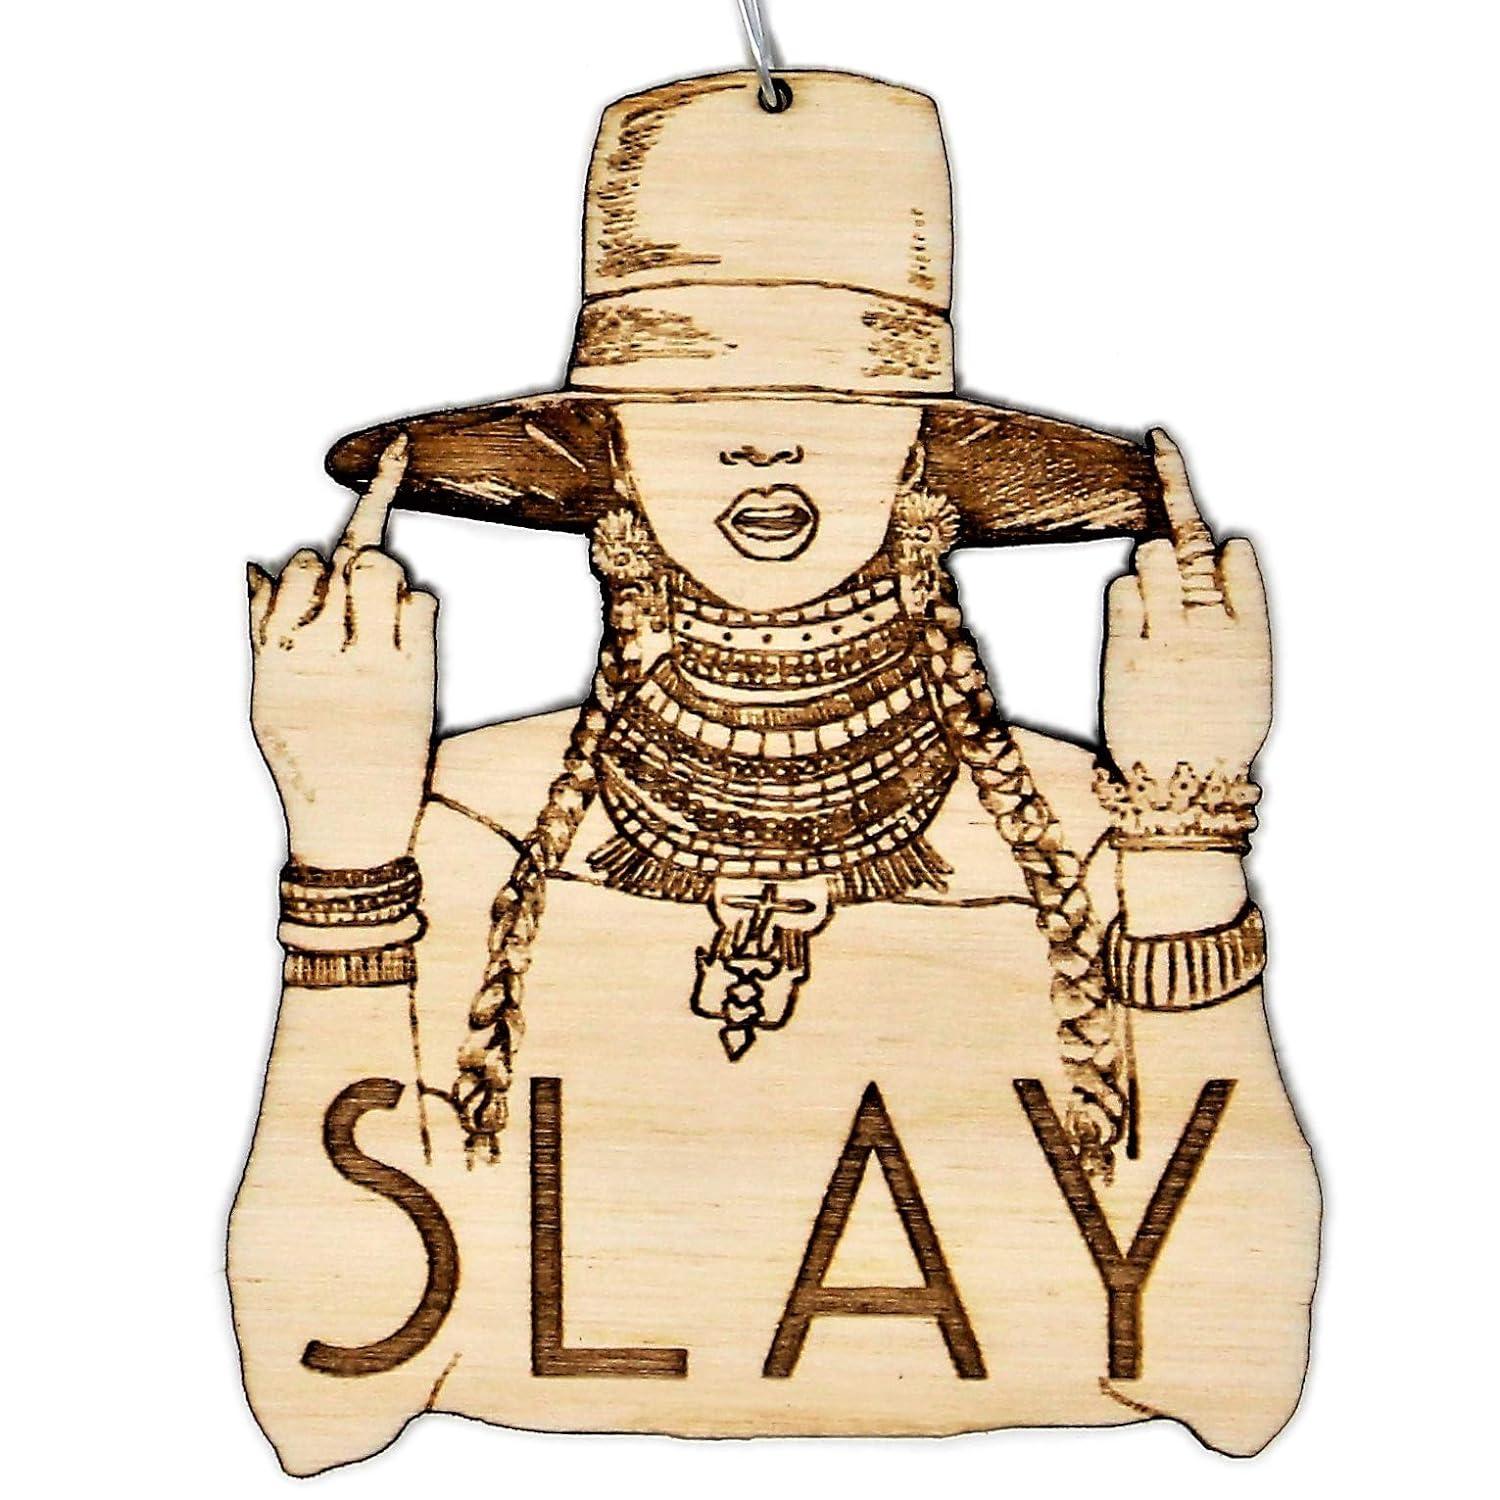 En prydnad av en siluett av Beyonce med ordet "Slay"